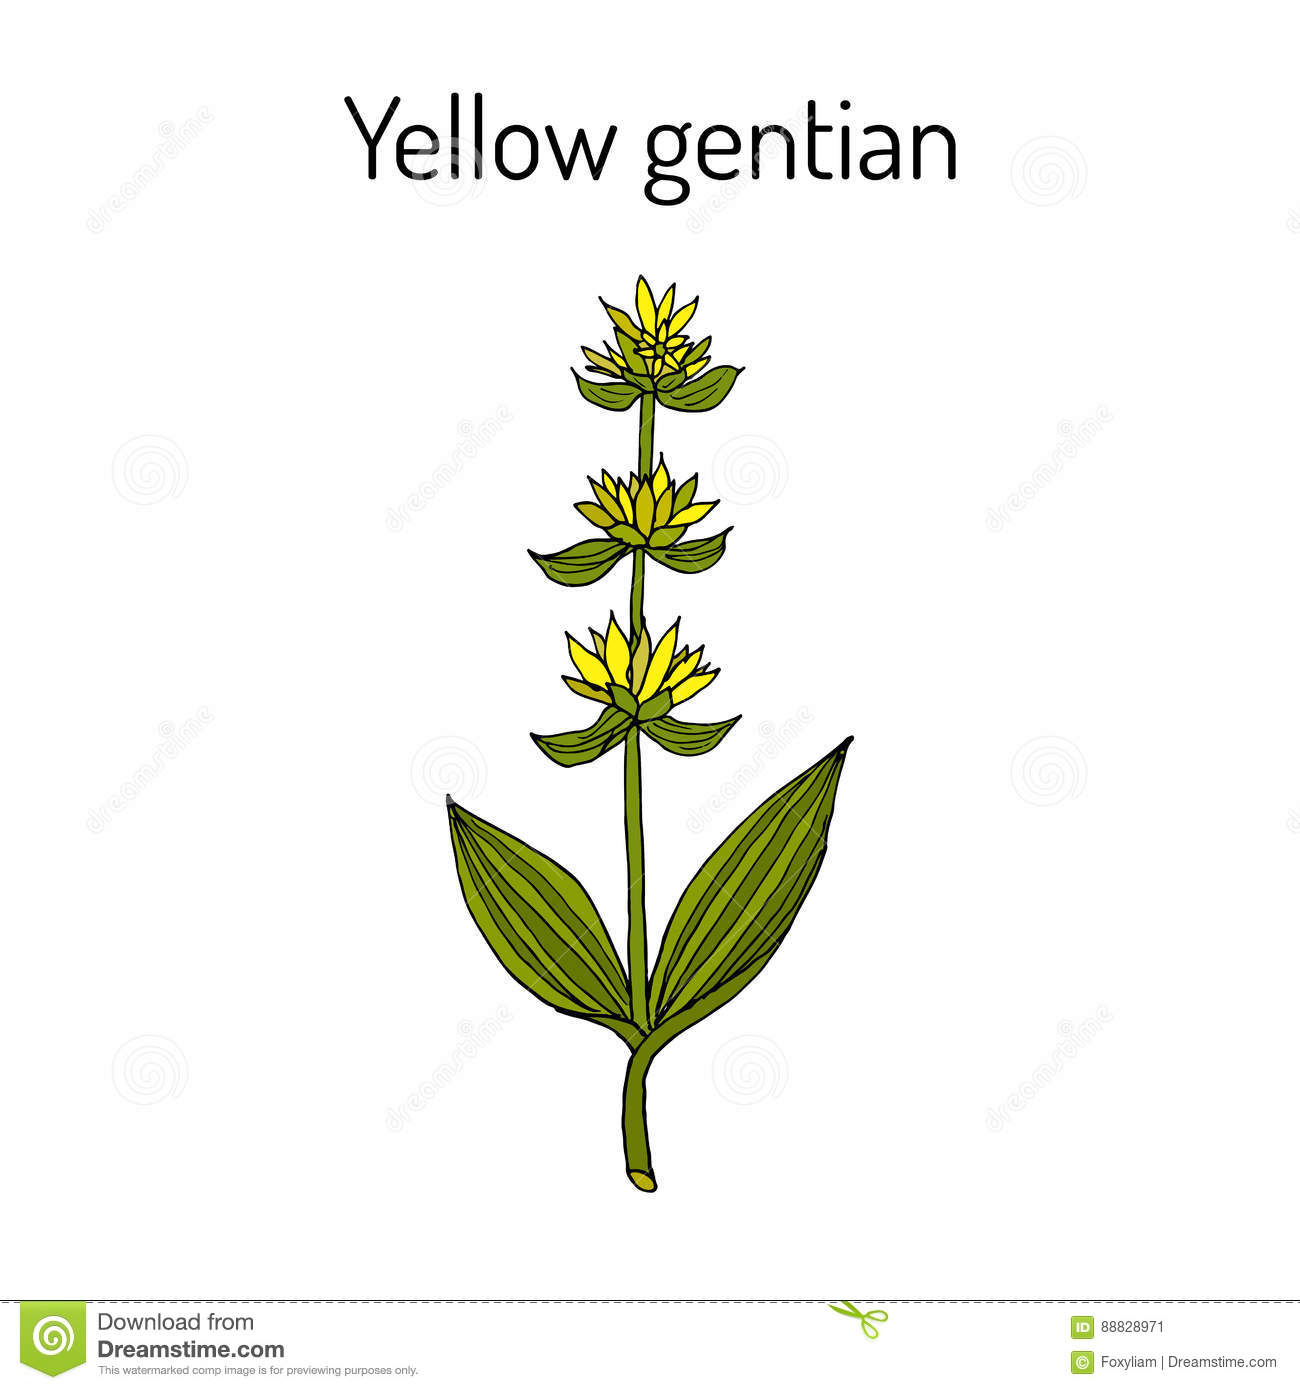 Gentiana Lutea Or Yellow Gentian, Botanical Vintage Engraving.